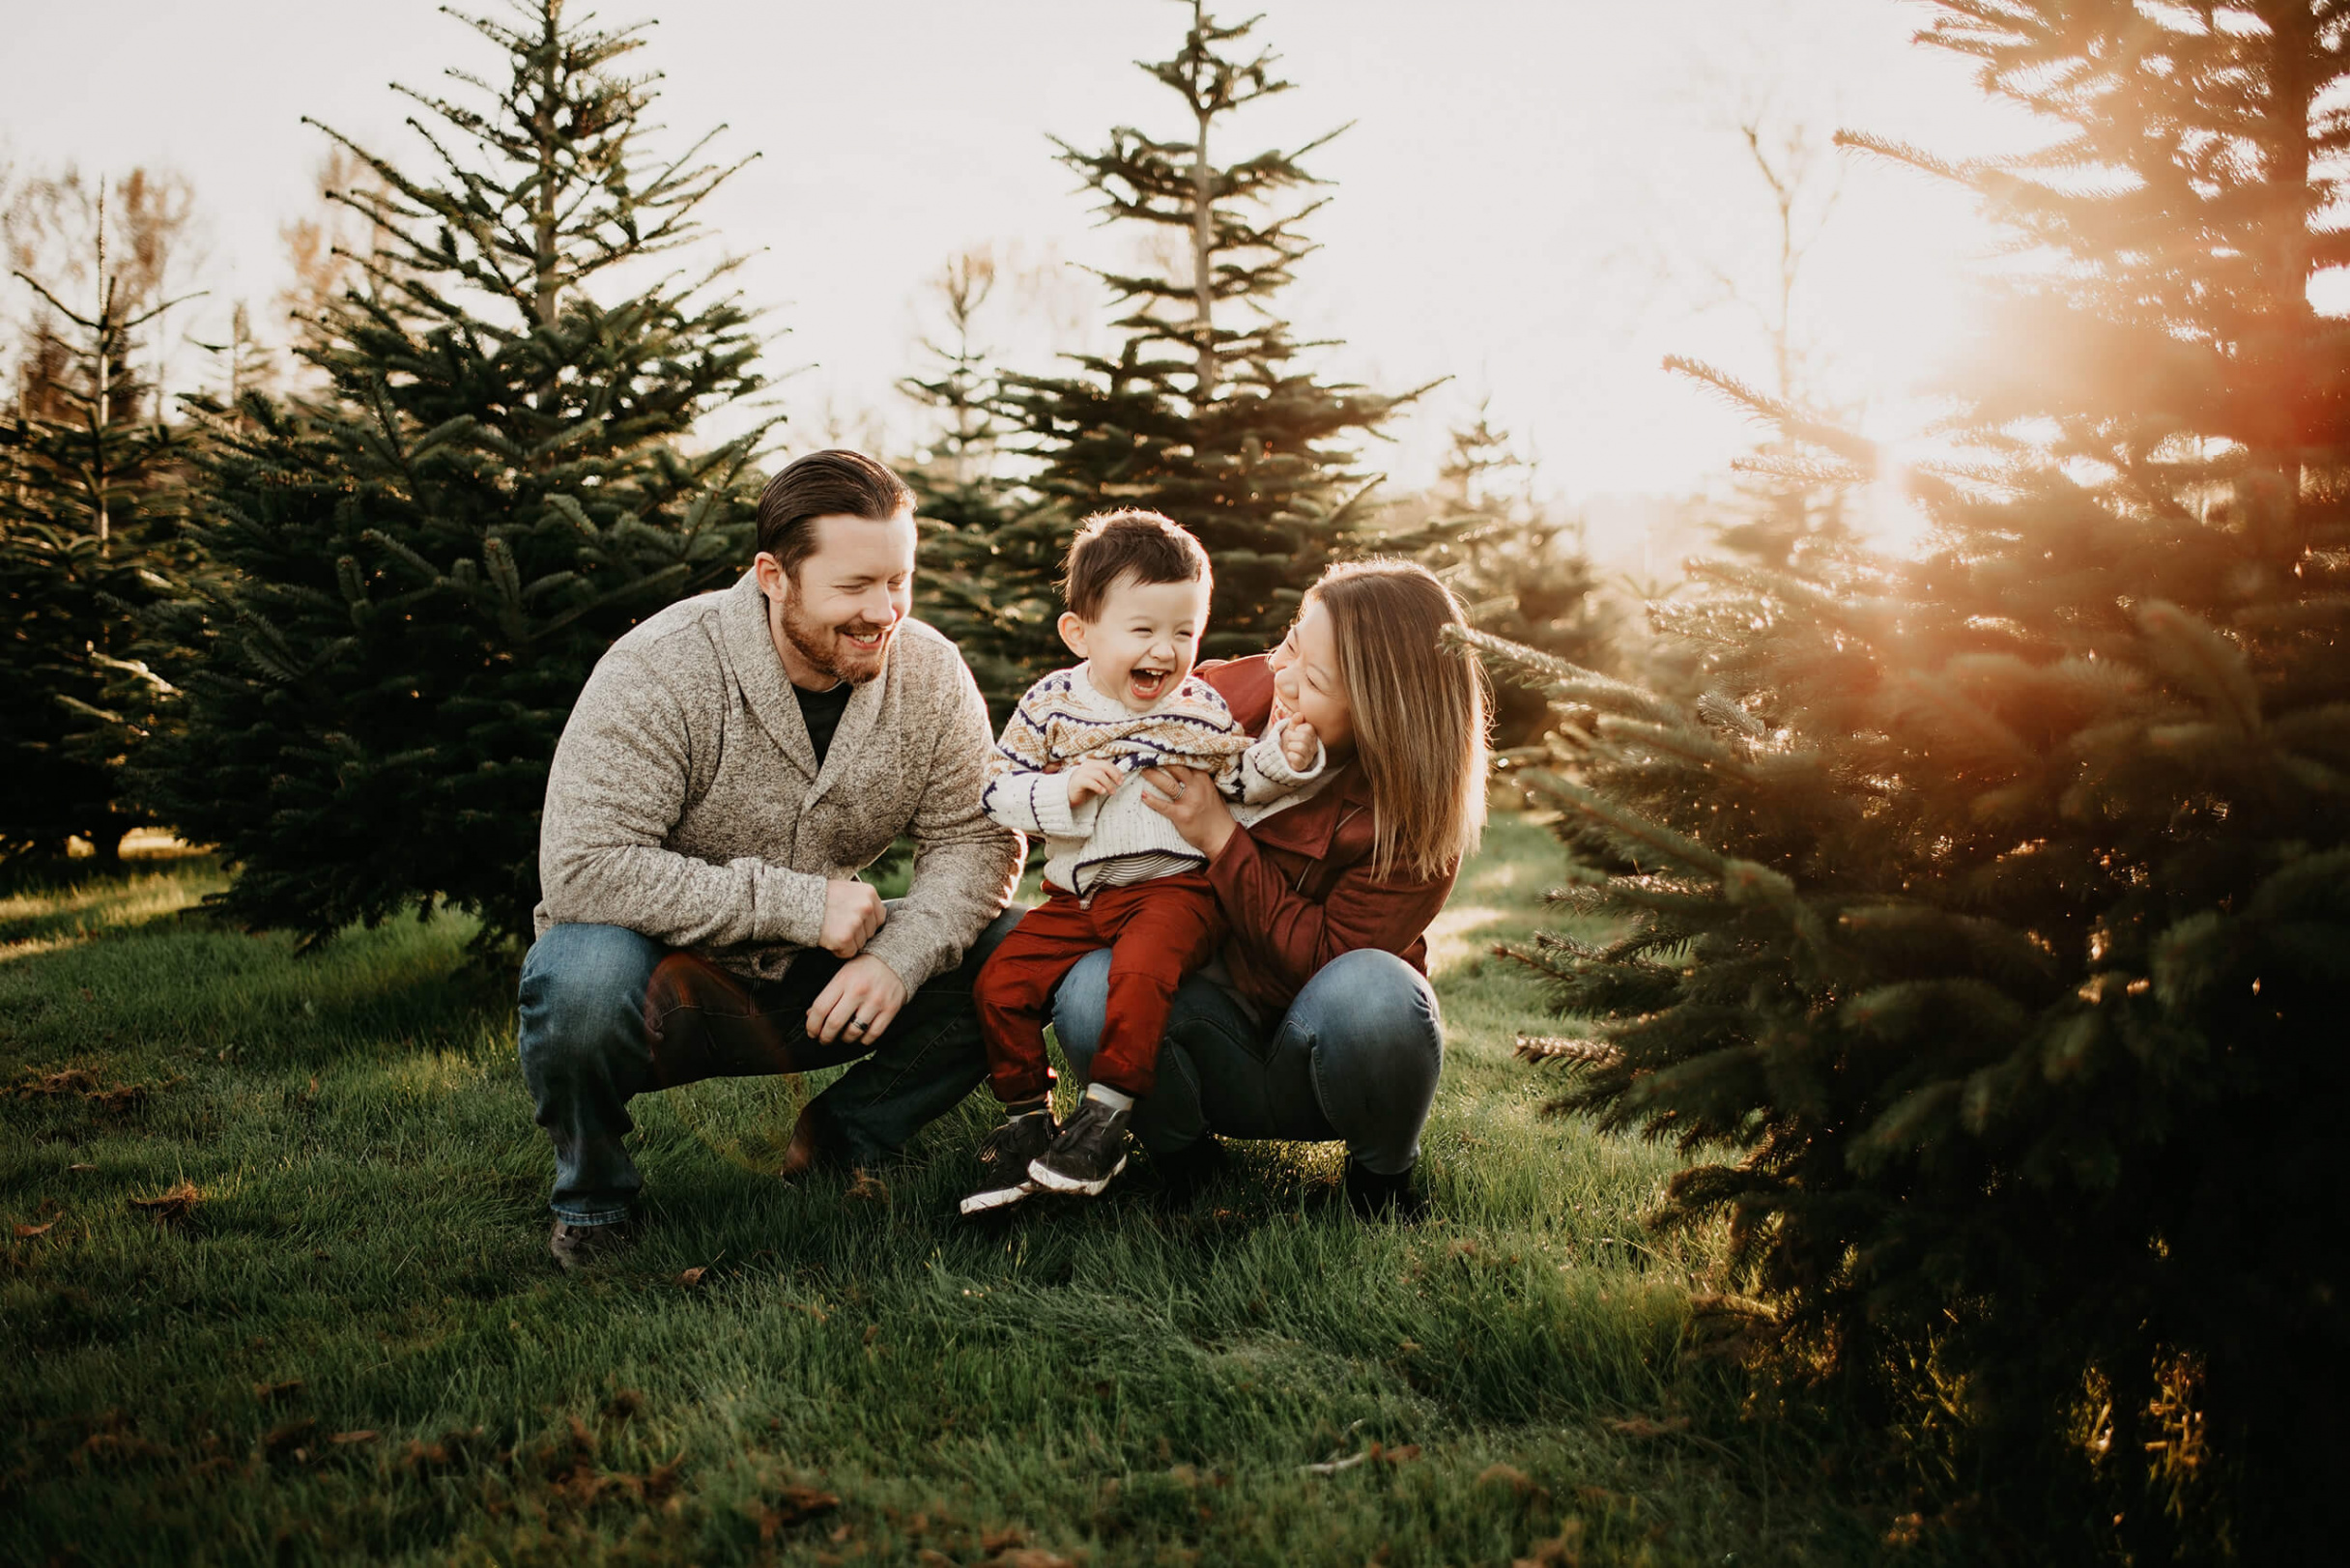 Christmas Tree Farm Family Photos: Samples, Outfit Tips, Posing